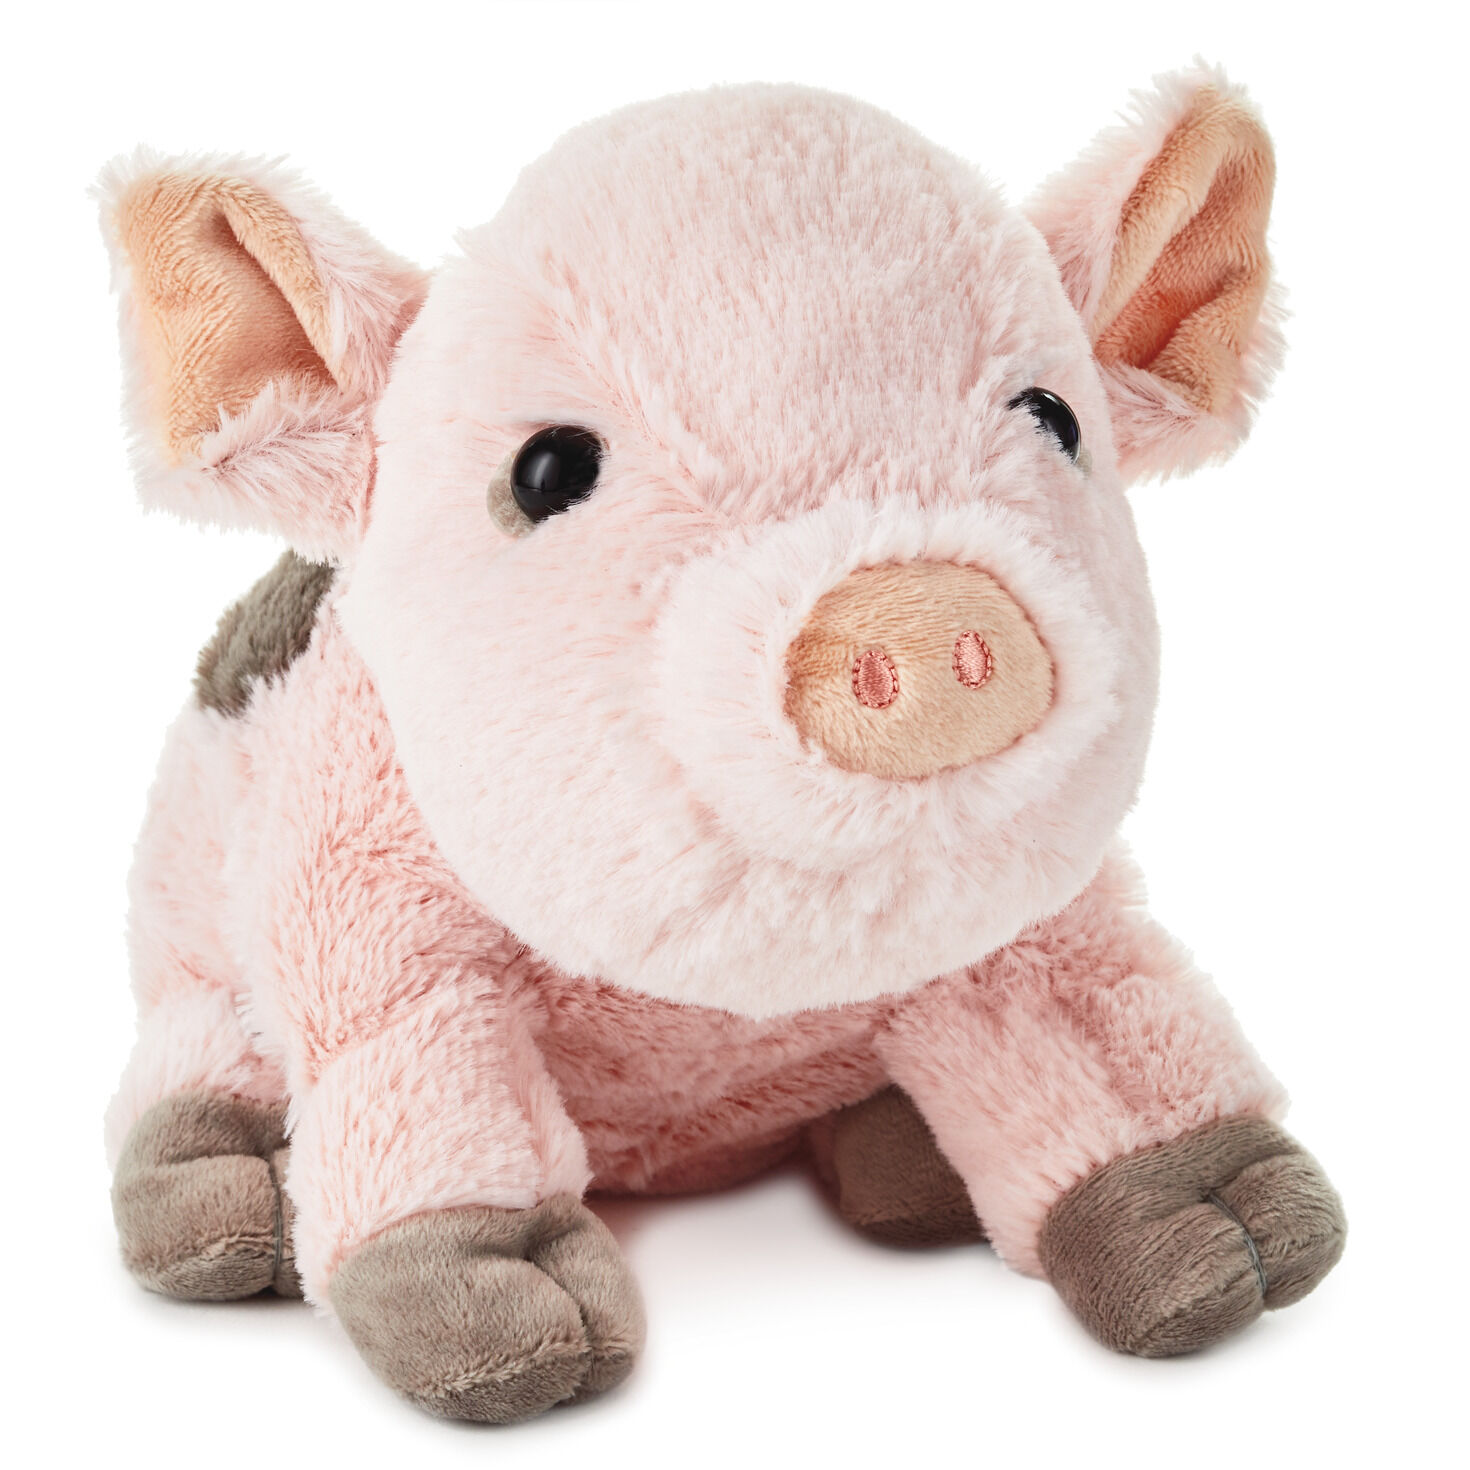 Teacup Pig Stuffed Animal Cheap Toys Kids Toys - roblox piggy toys walmart